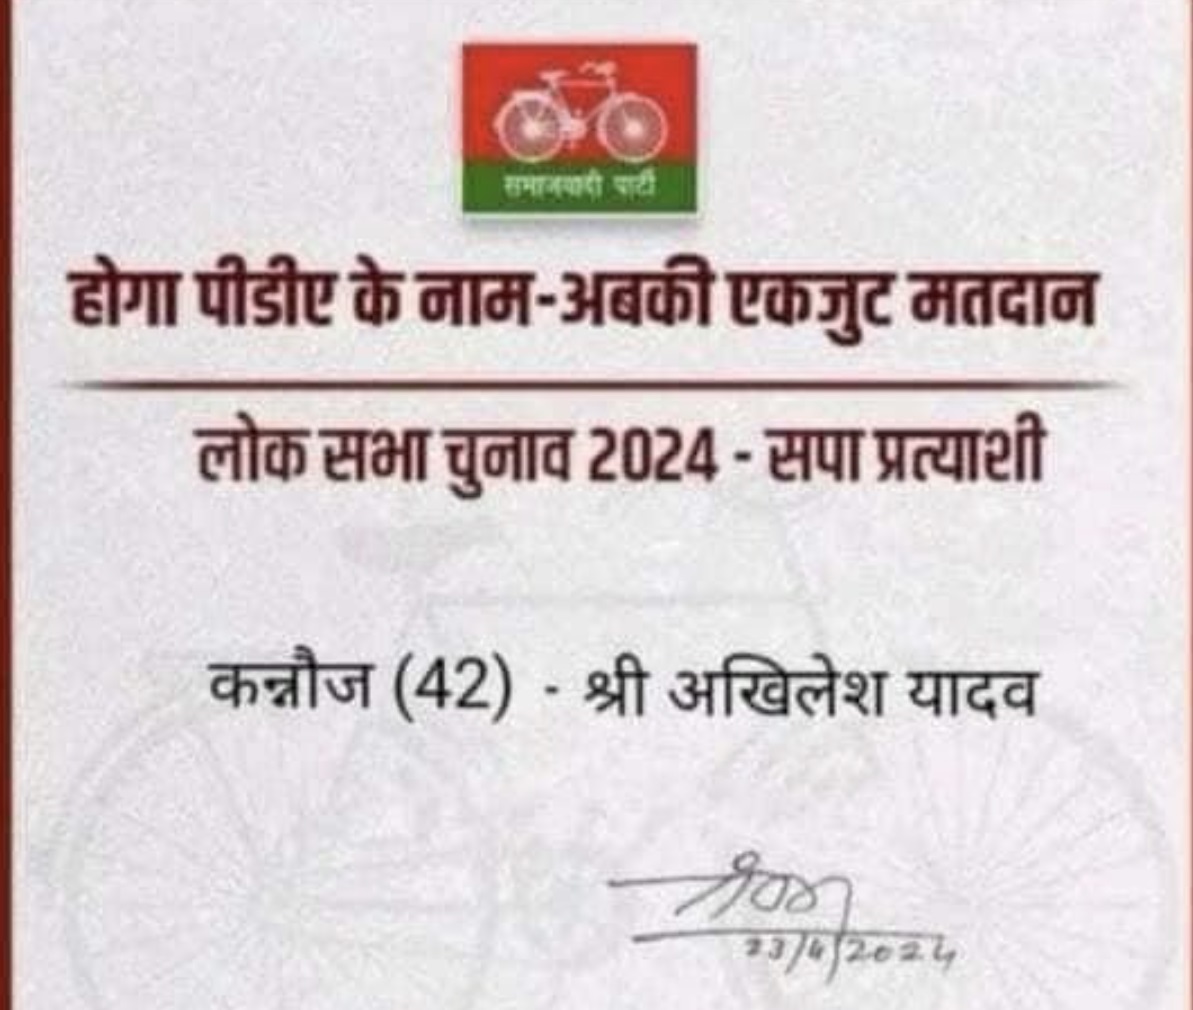 Akhilesh Yadav will contest elections from Kannauj Lok Sabha seat